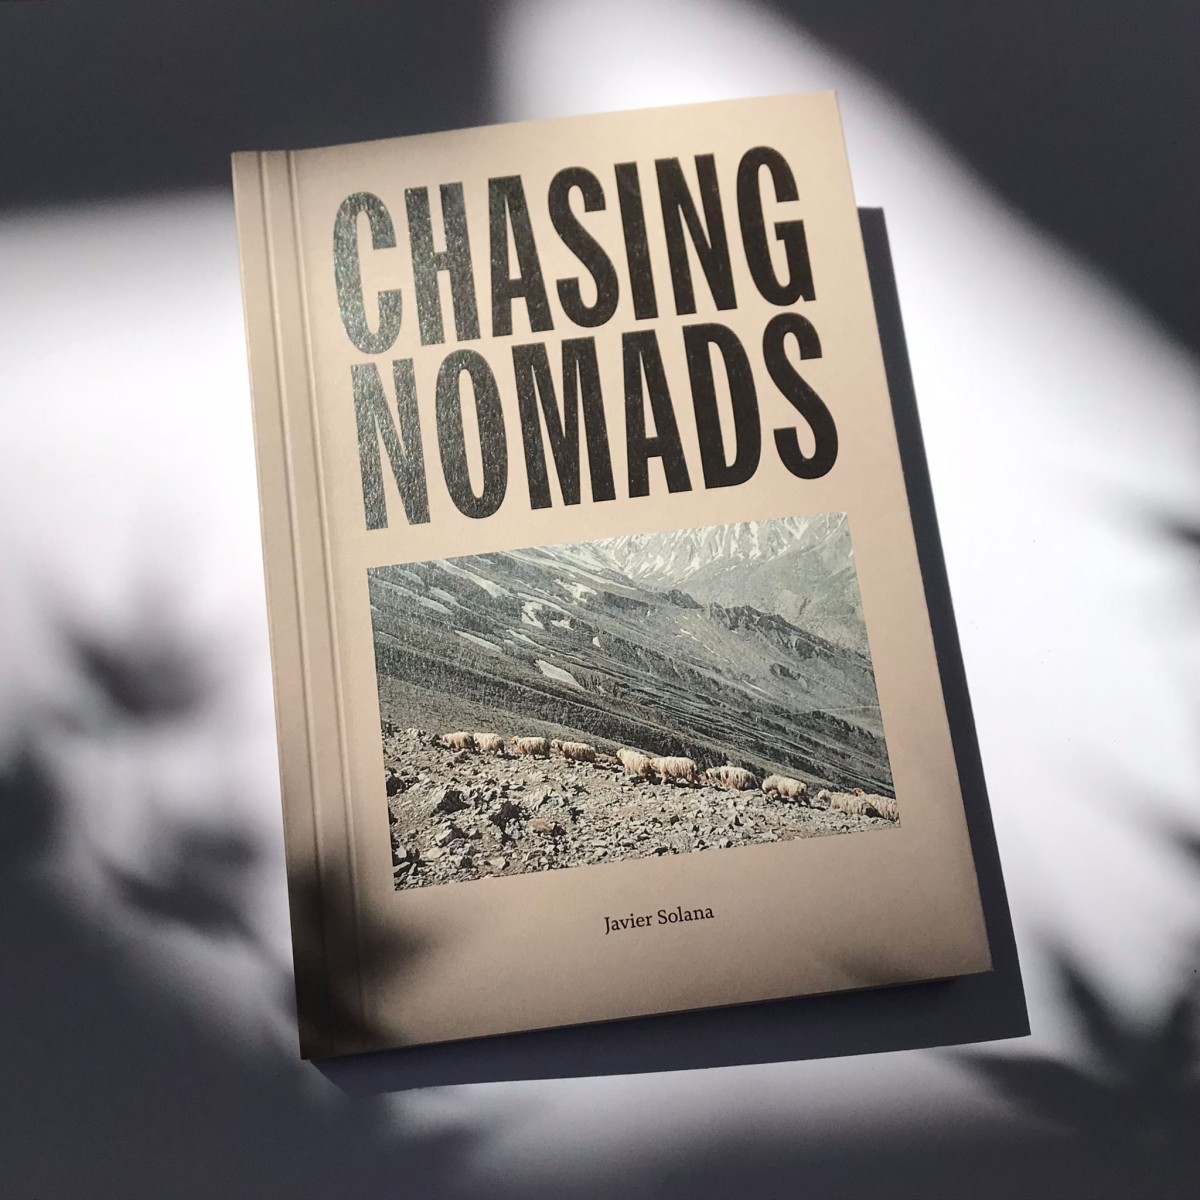 Chasing nomads